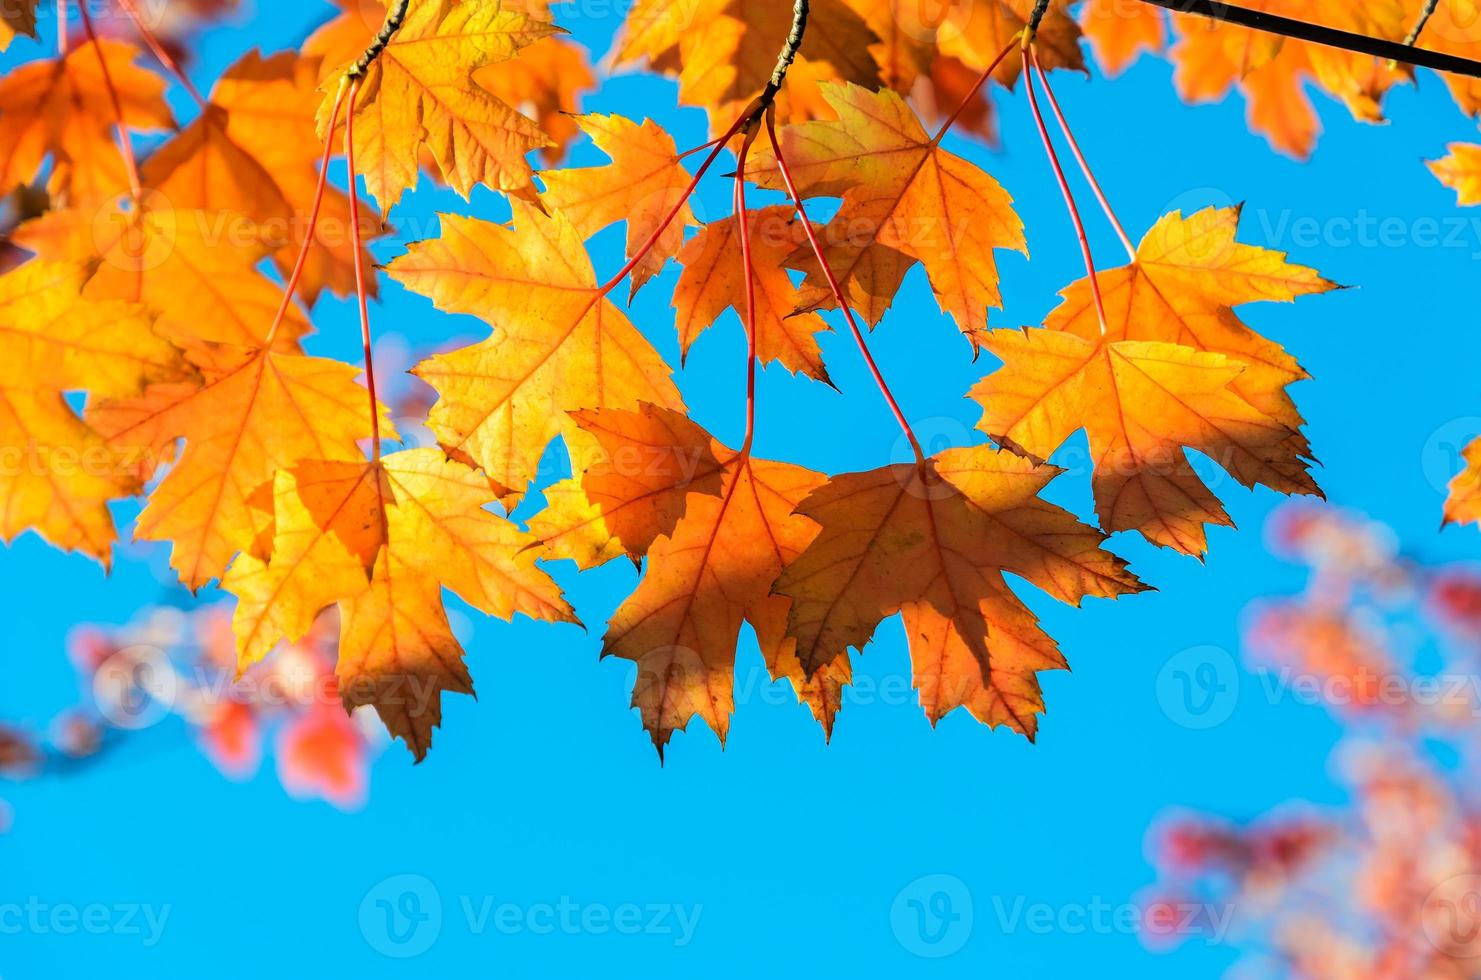 höst gul lönn blad träd bakgrund foto